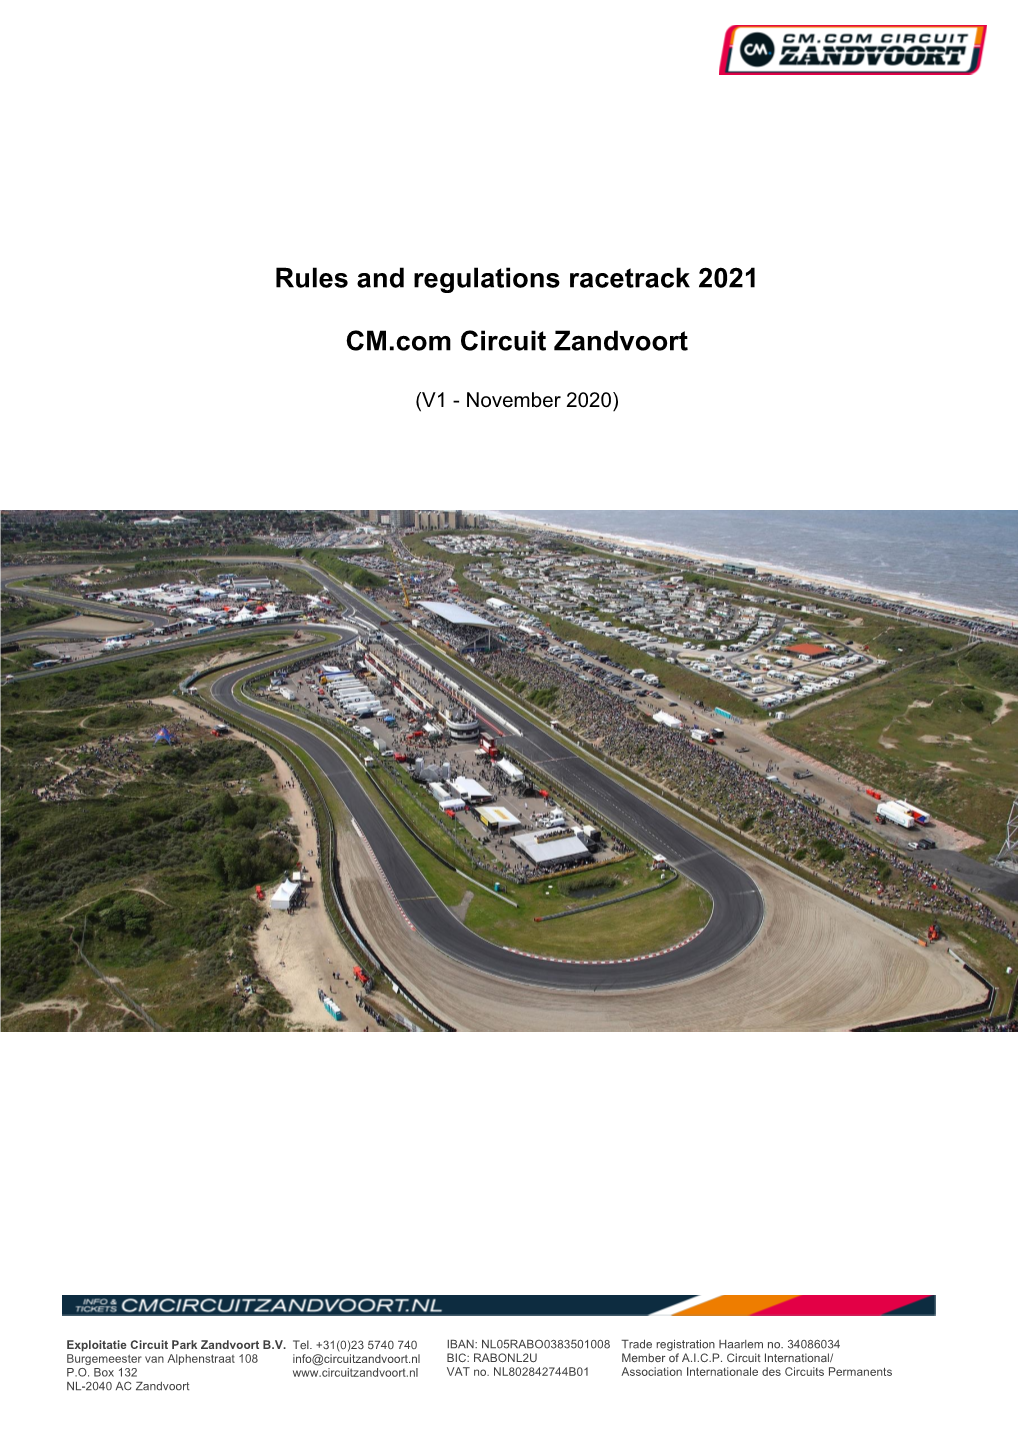 Rules and Regulations Racetrack 2021 CM.Com Circuit Zandvoort